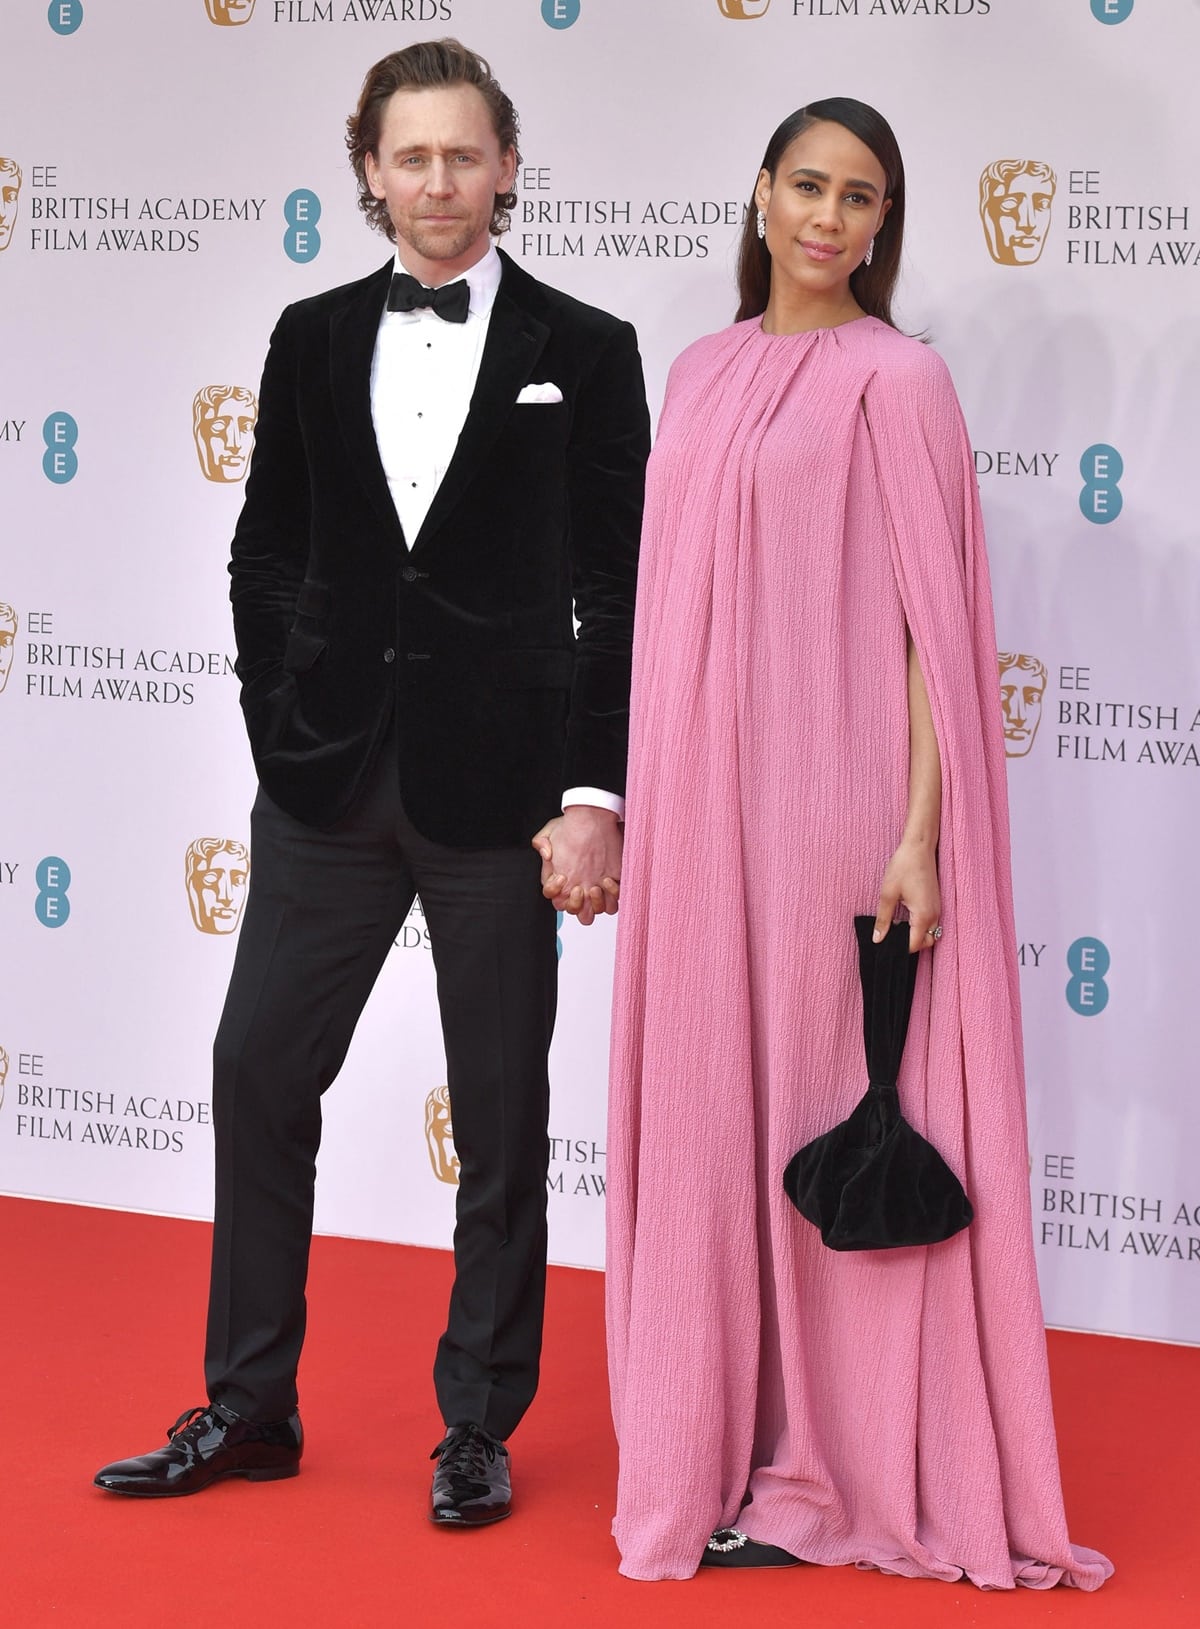 Tom Hiddleston in Ralph Lauren and Zawe Ashton in an Emilia Wickstead dress at the EE British Academy Film Awards 2022 dinner